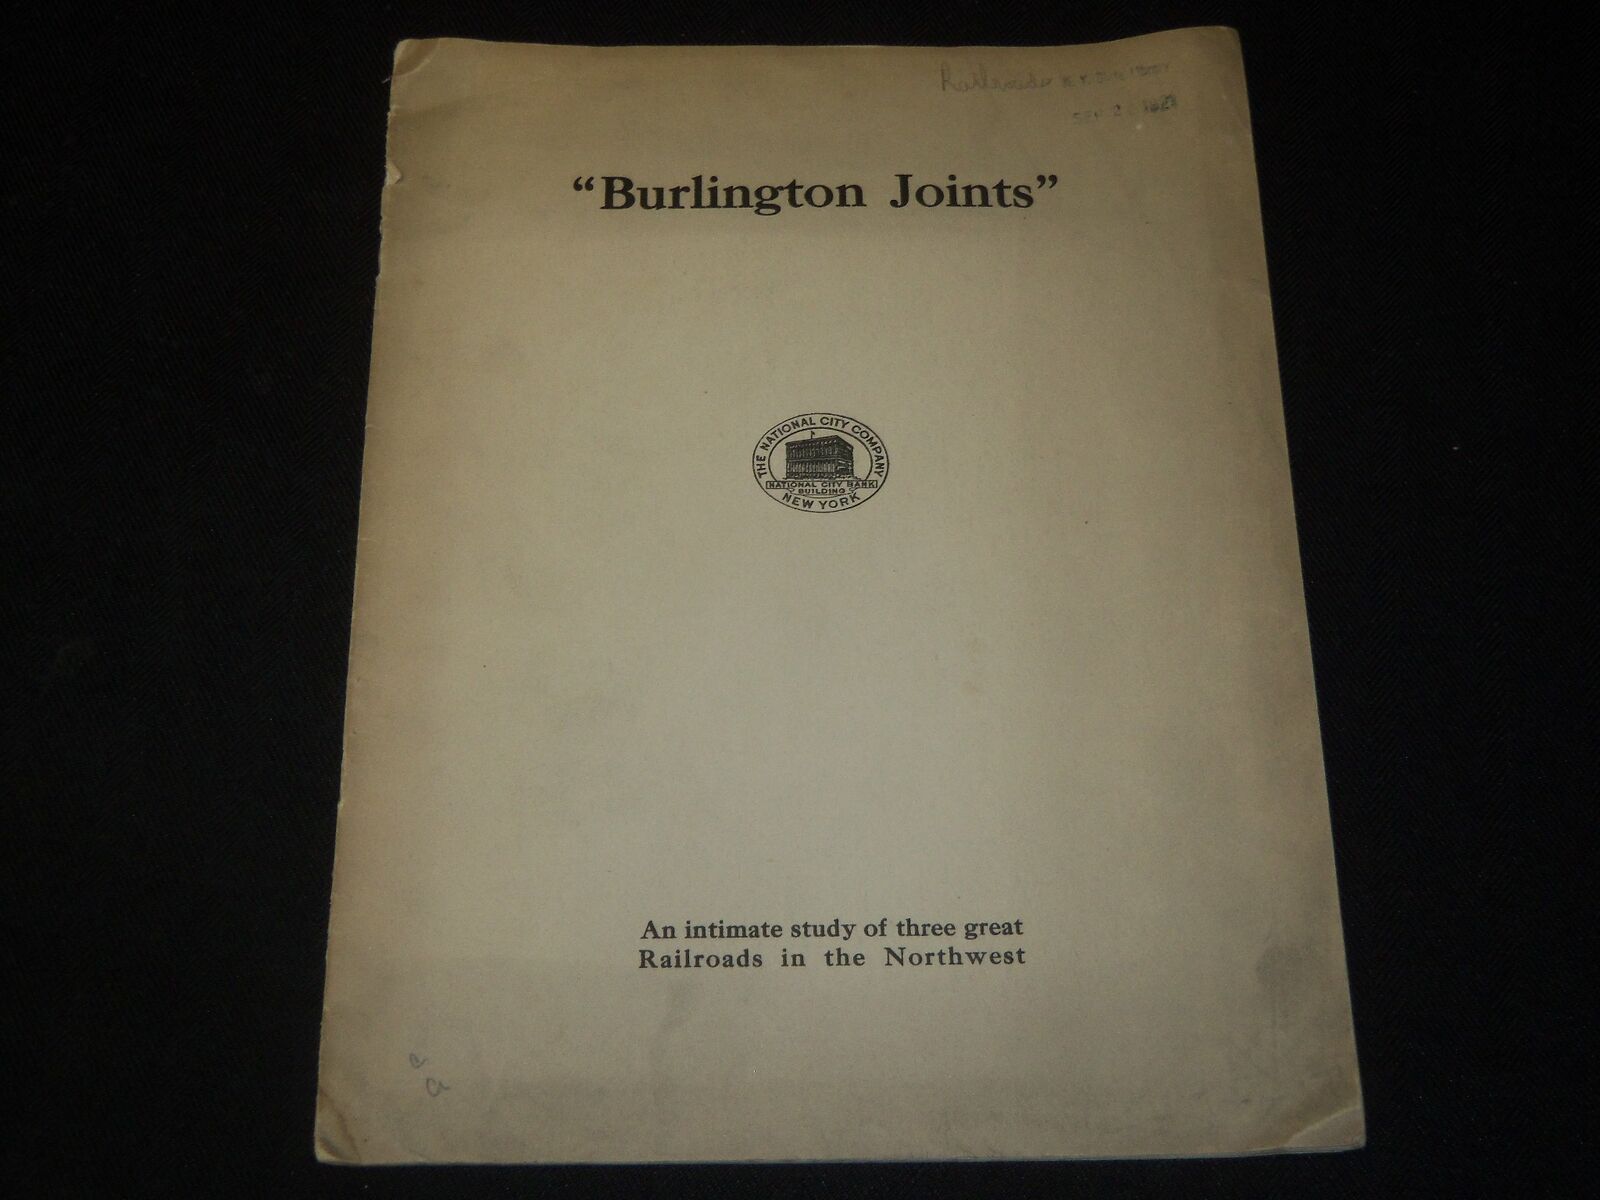 1921 BURLINGTON JOINTS INTIMATE STUDY OF THREE GREAT RAILROADS BOOK - J 5426